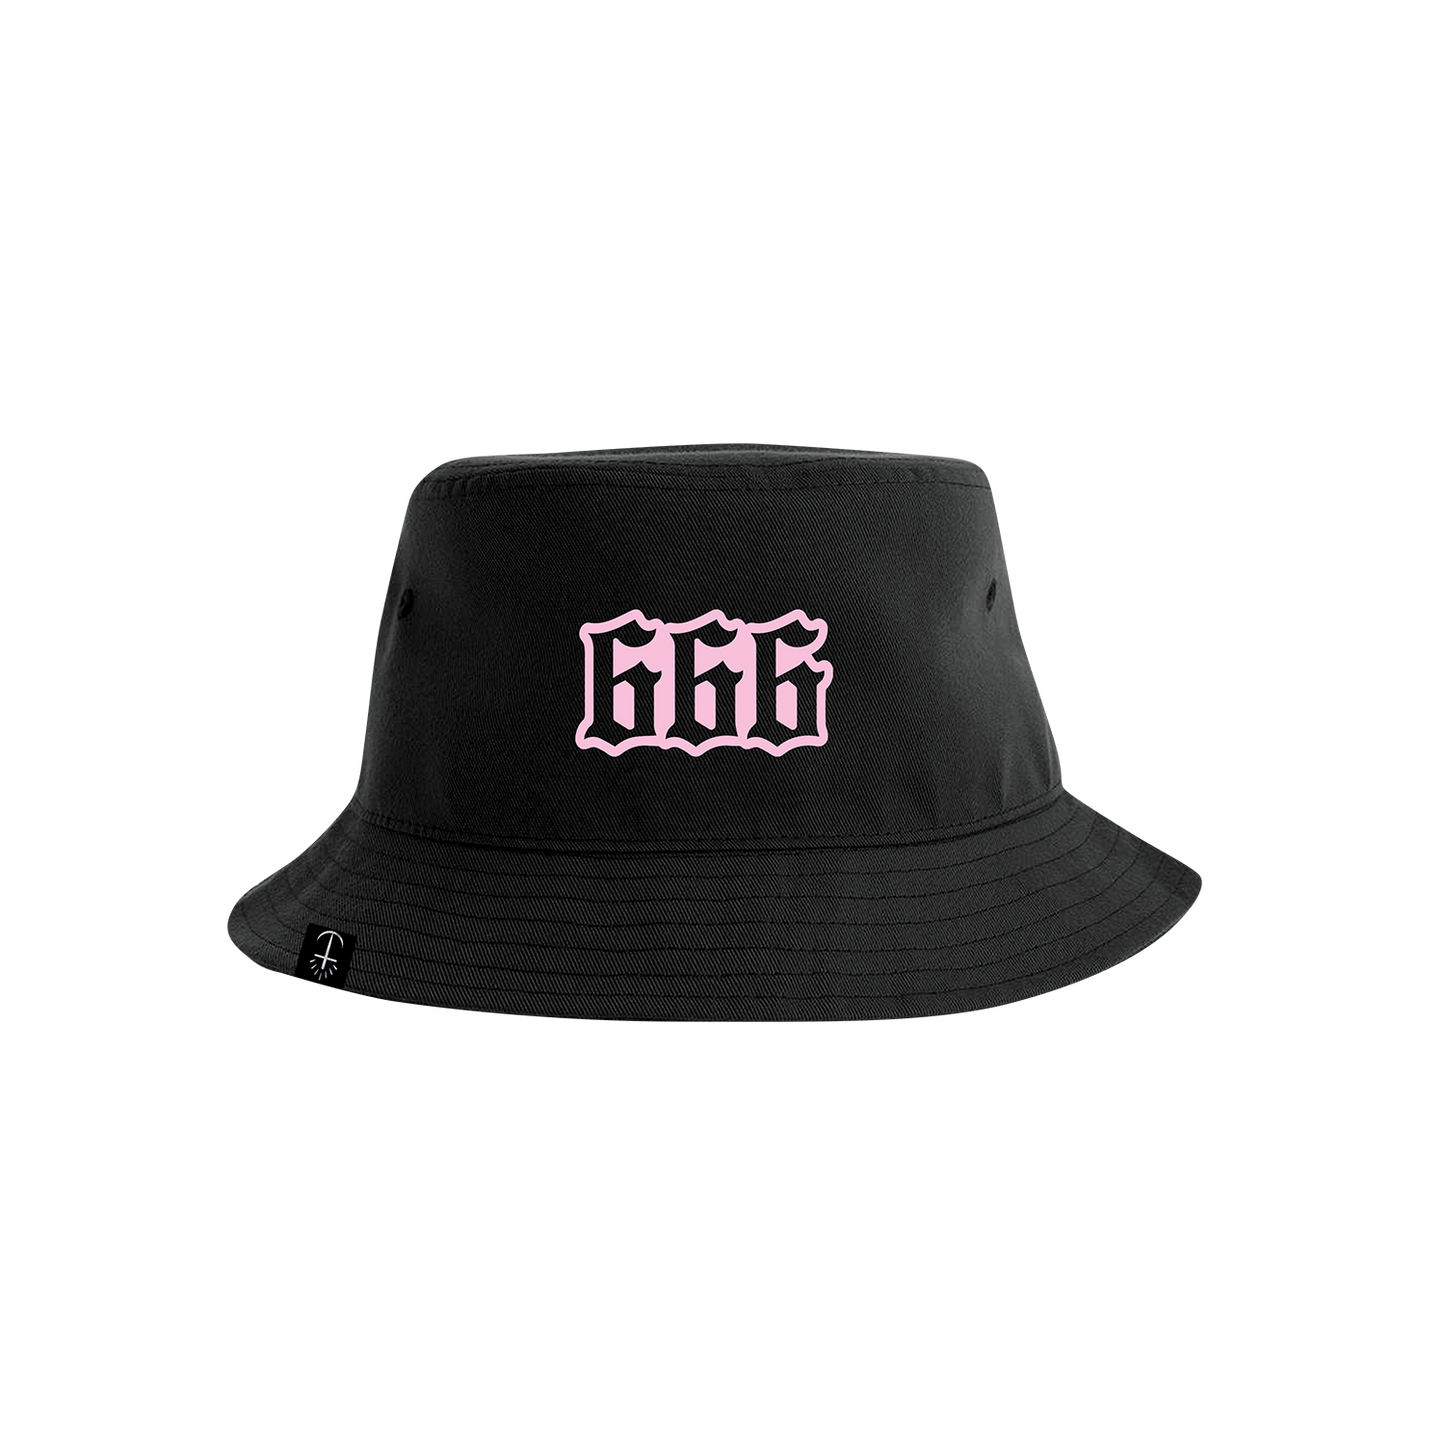 Taking Chances - 666 Bucket Hat